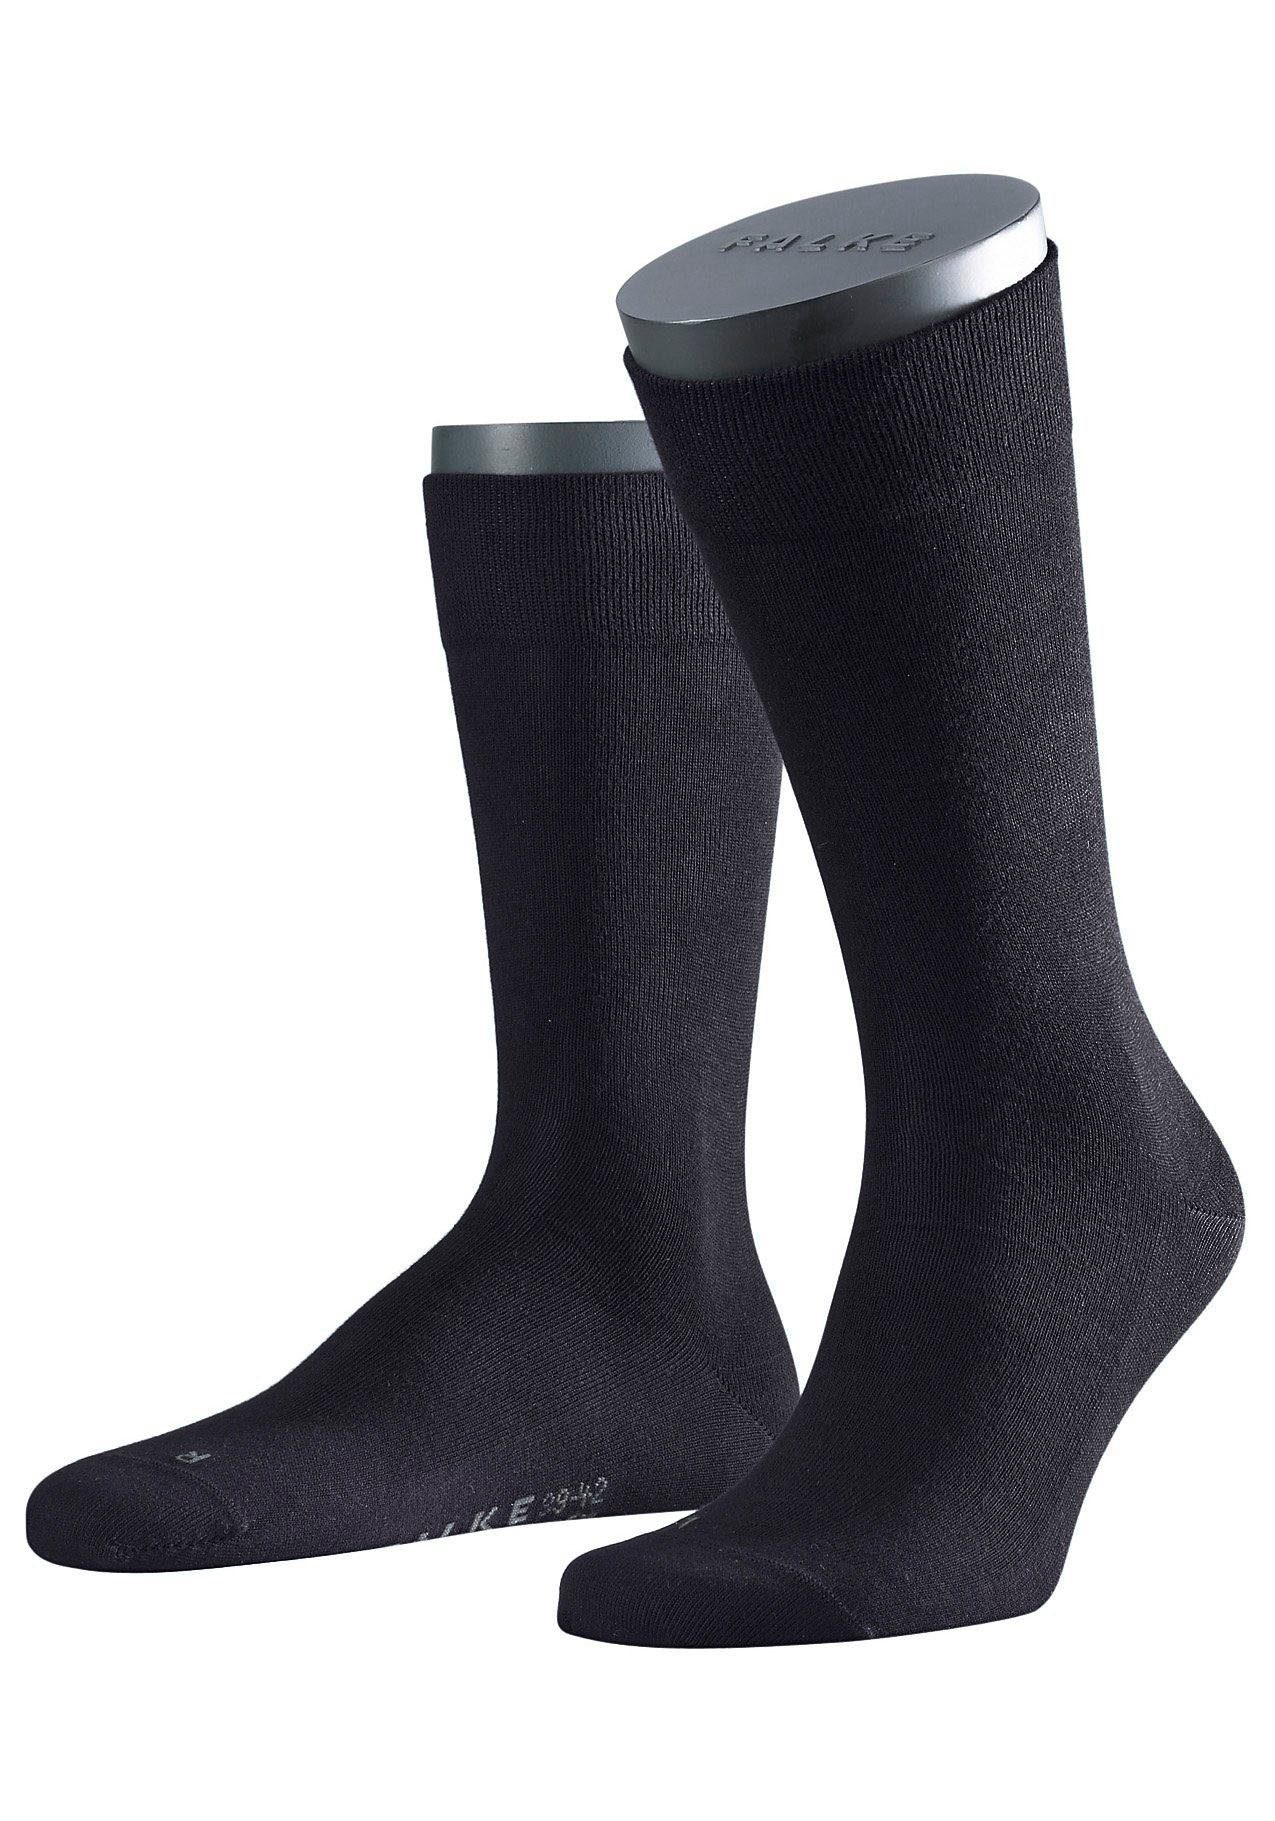 Gummi sensitve (2-Paar) mit Socken FALKE London ohne schwarz Sensitive Bündchen